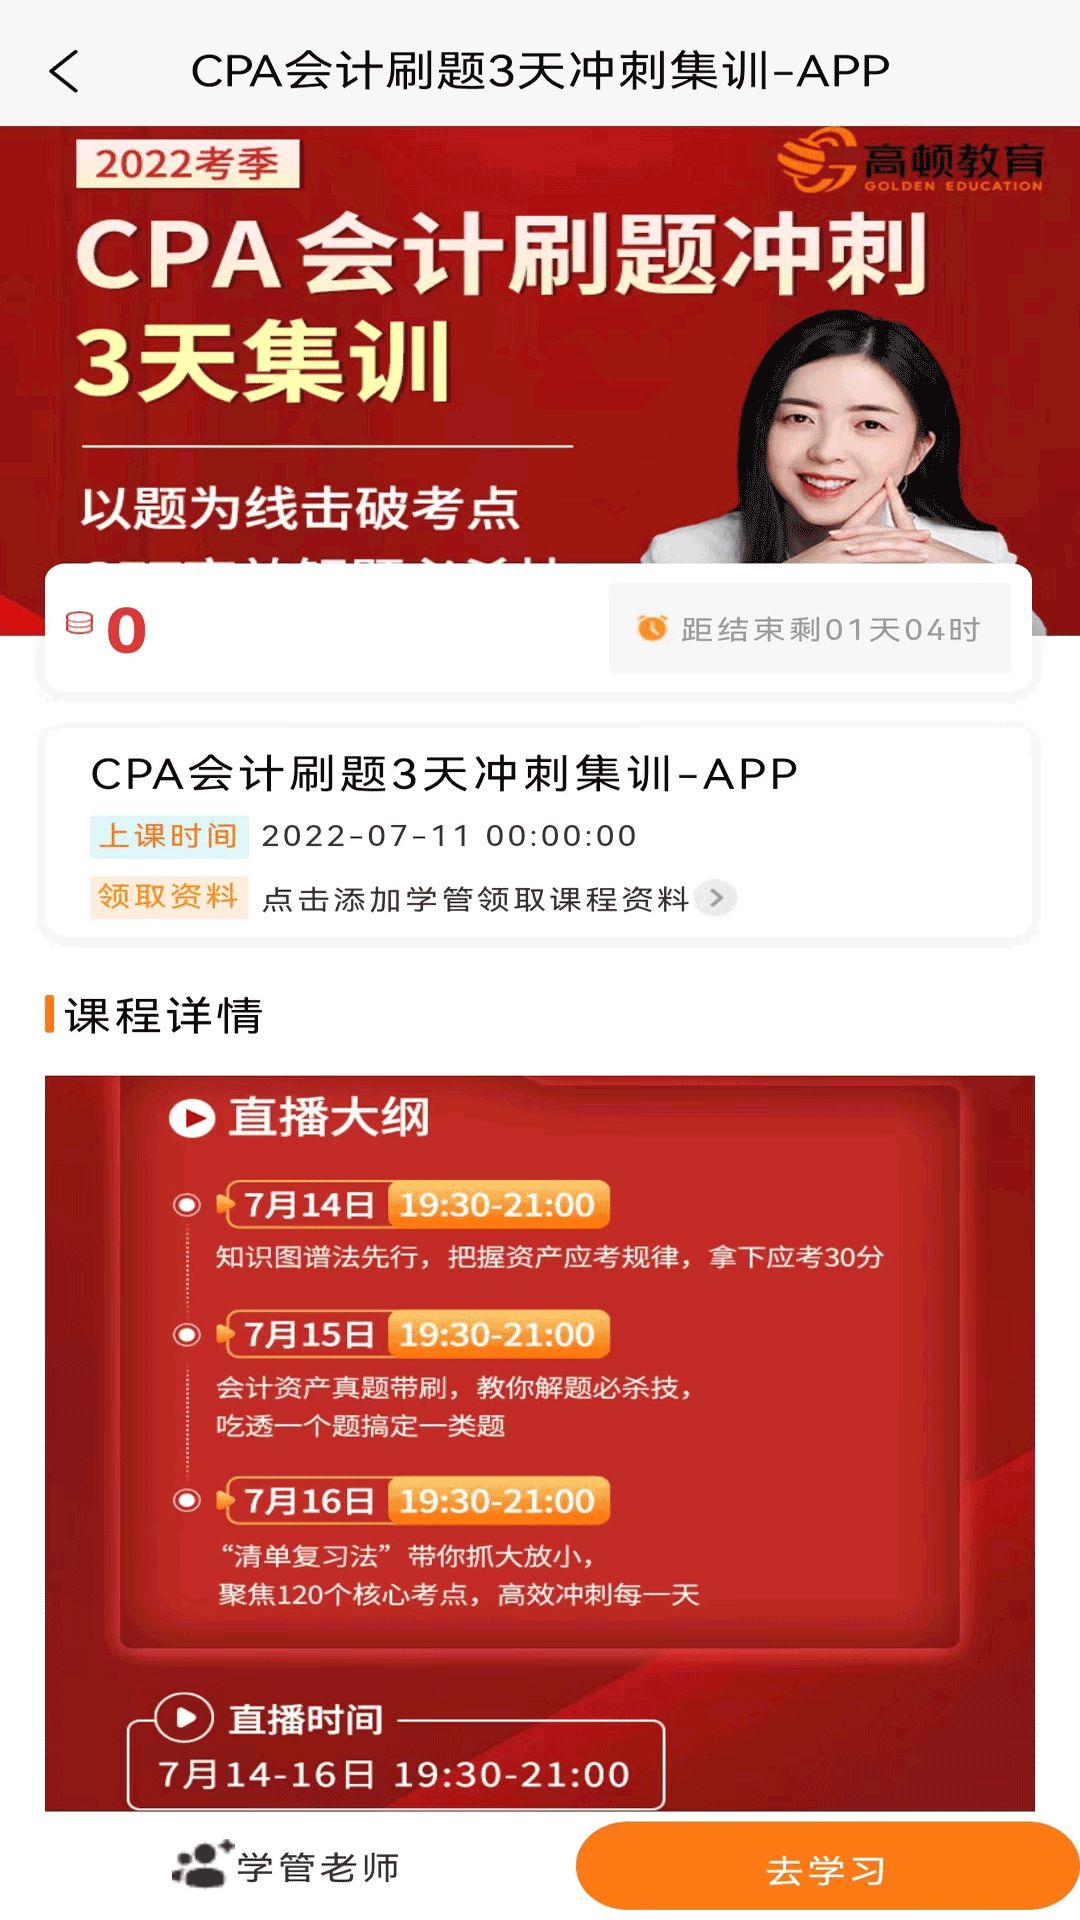 CPA考试题库app官方版图片1